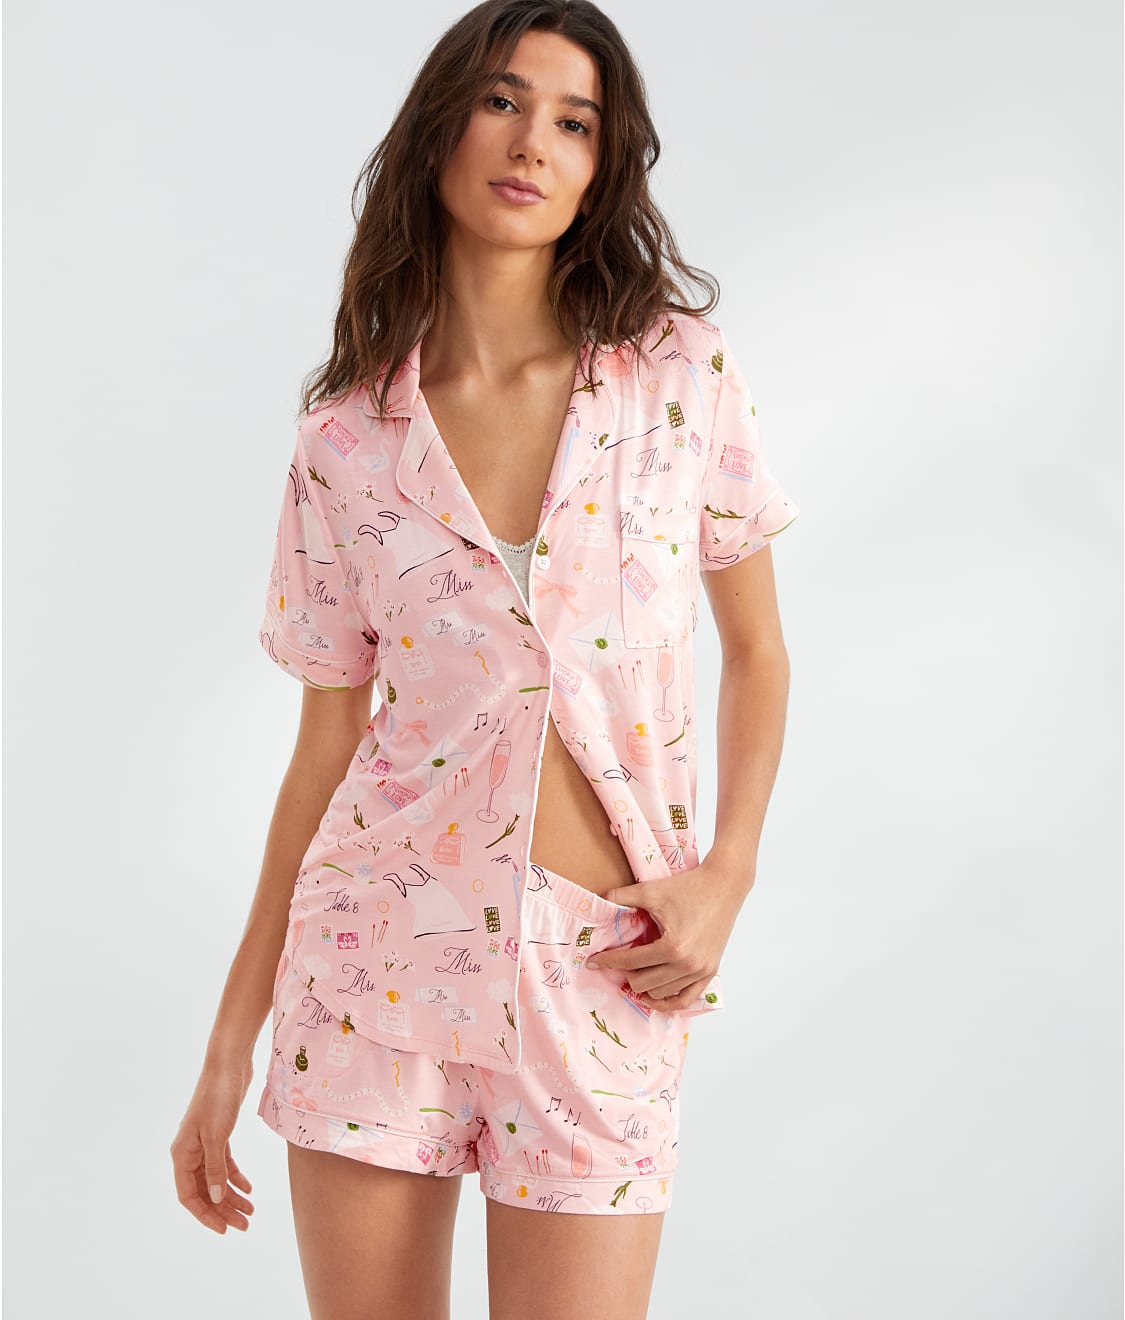 kate spade new york With Love Modal Knit Pajama Short Set & Reviews ...